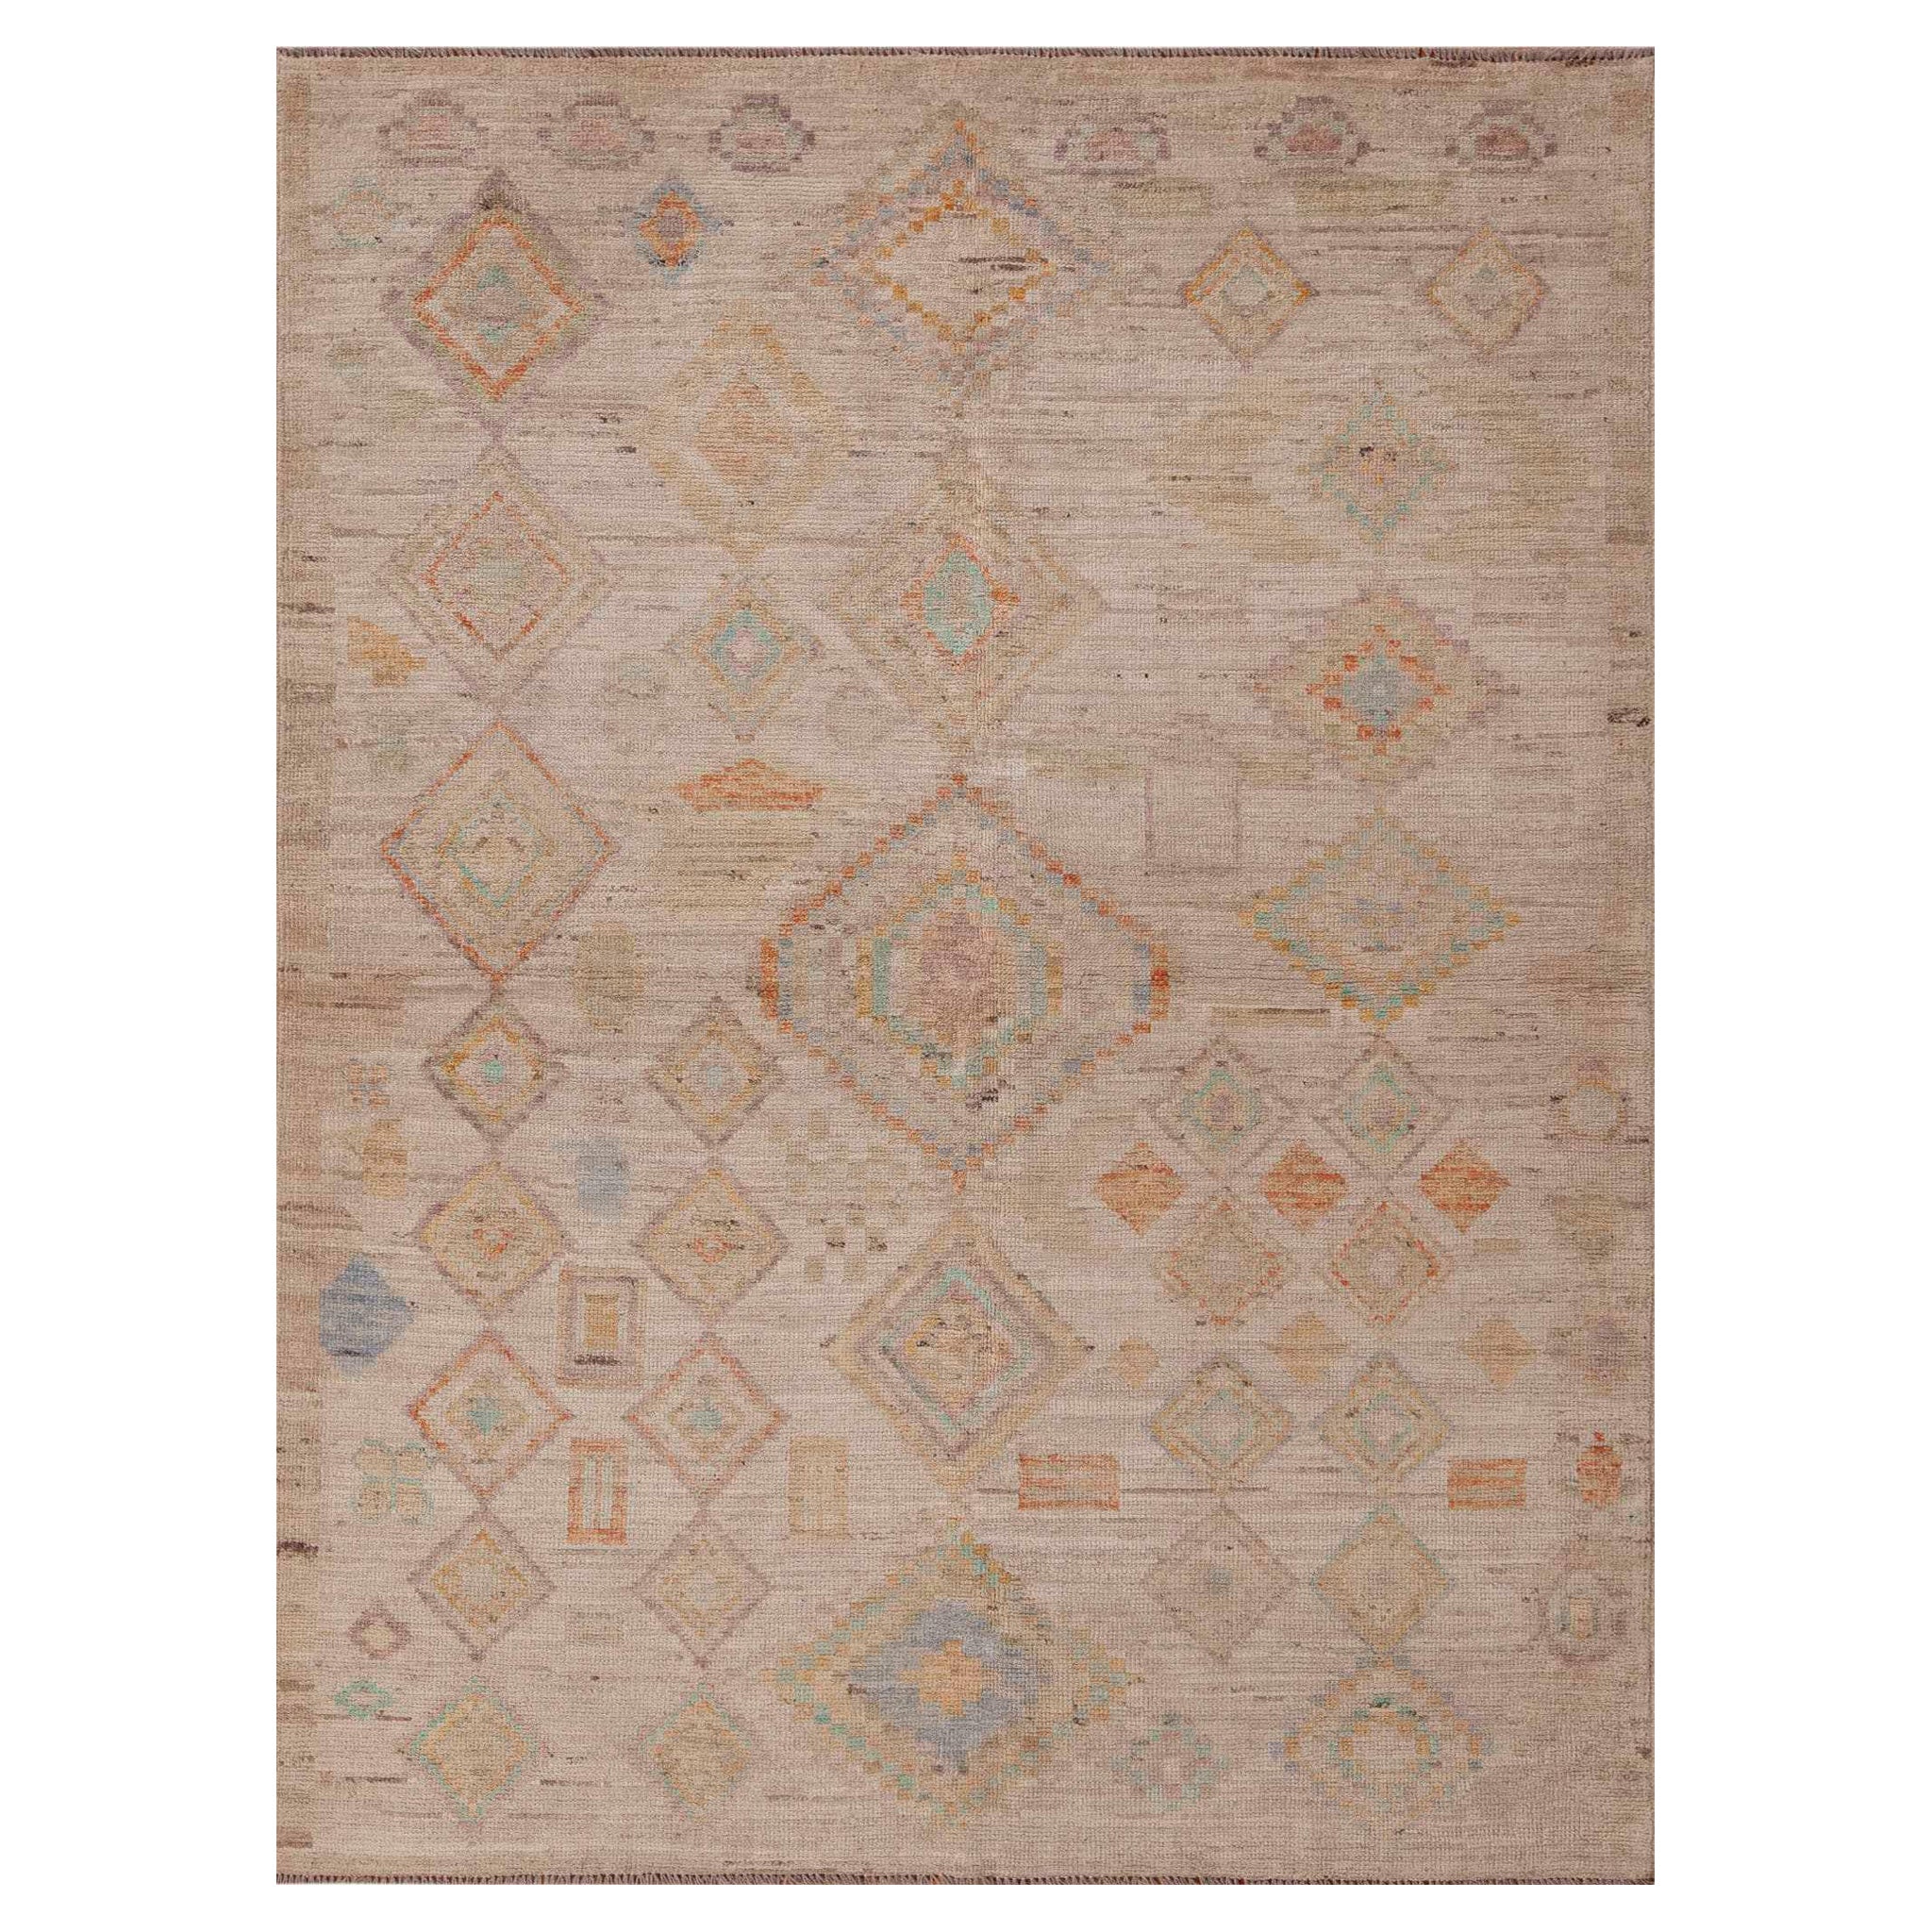 Nazmiyal Collection Modern Tribal Geometric Design Rustic Area Rug 5'3" x 6'9" For Sale